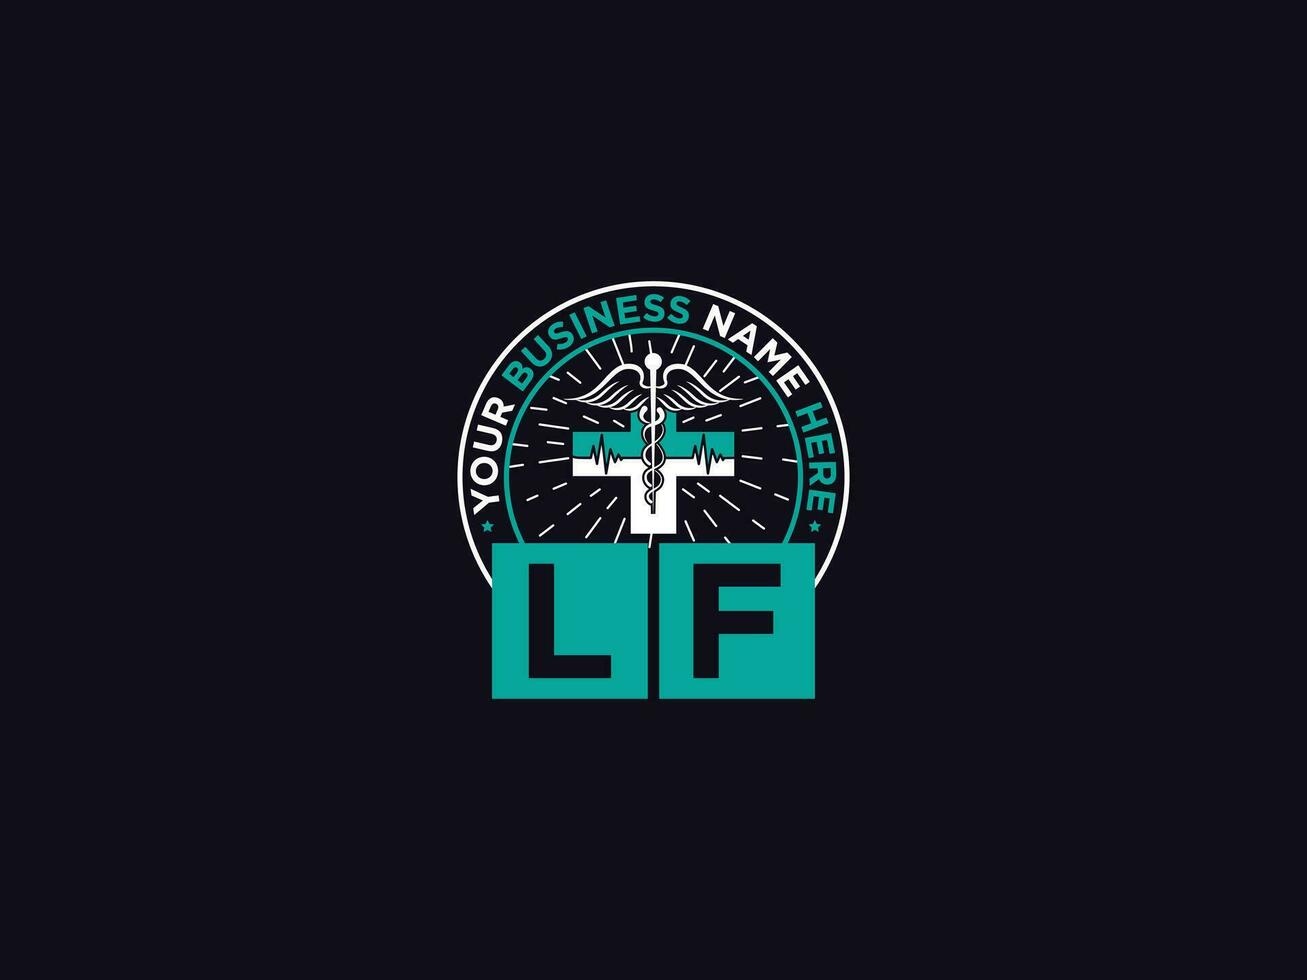 Plus Lf Logo Art, Typography LF Medical Letter Logo Vector For Doctors